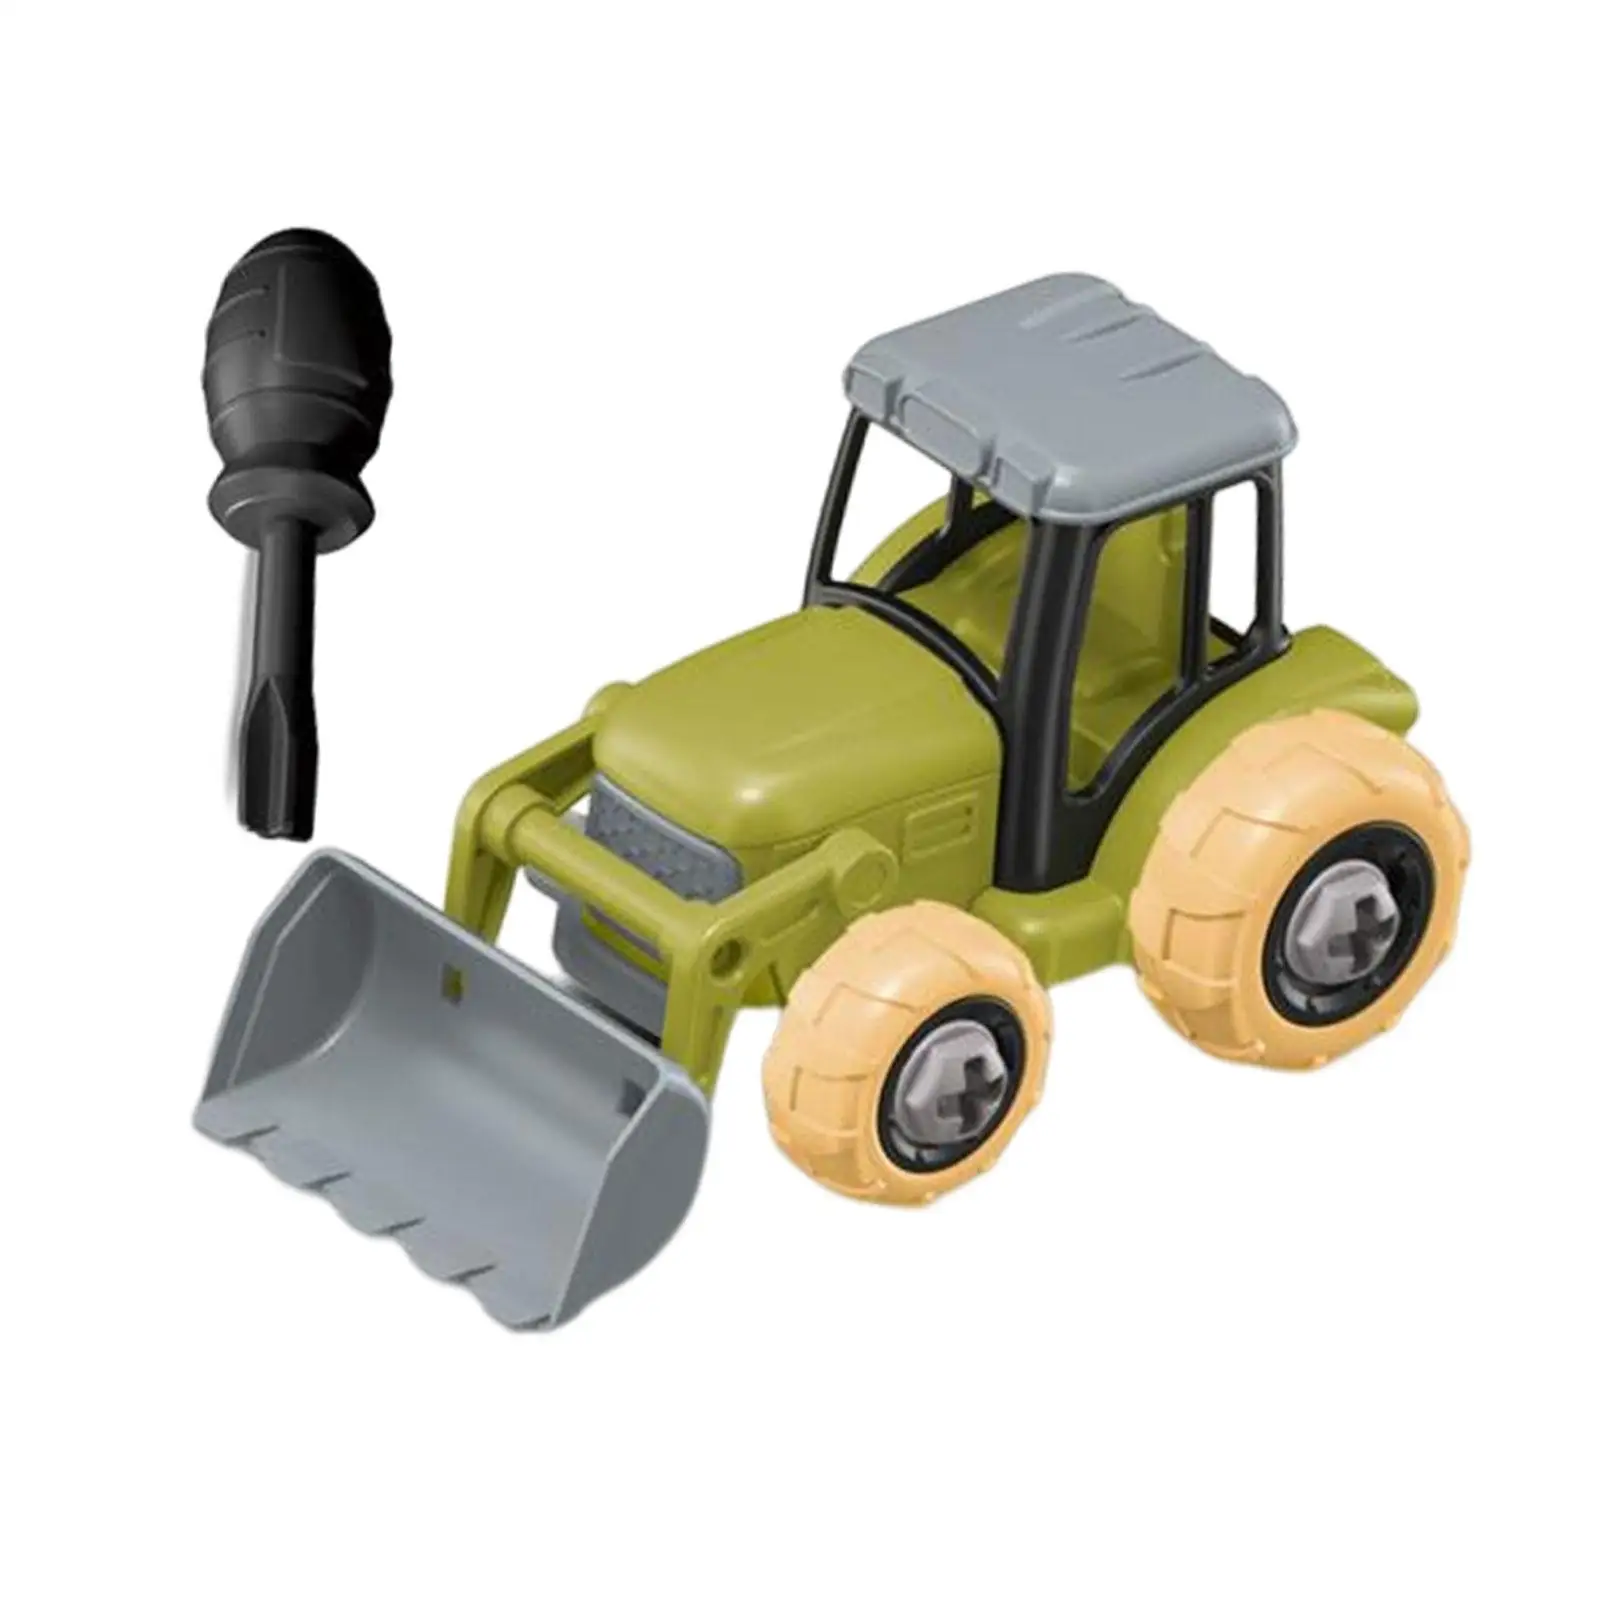 Take Apart Toy Excavator Truck Early Childhood Developmental Skills Construction Engineering Toys for Preschool